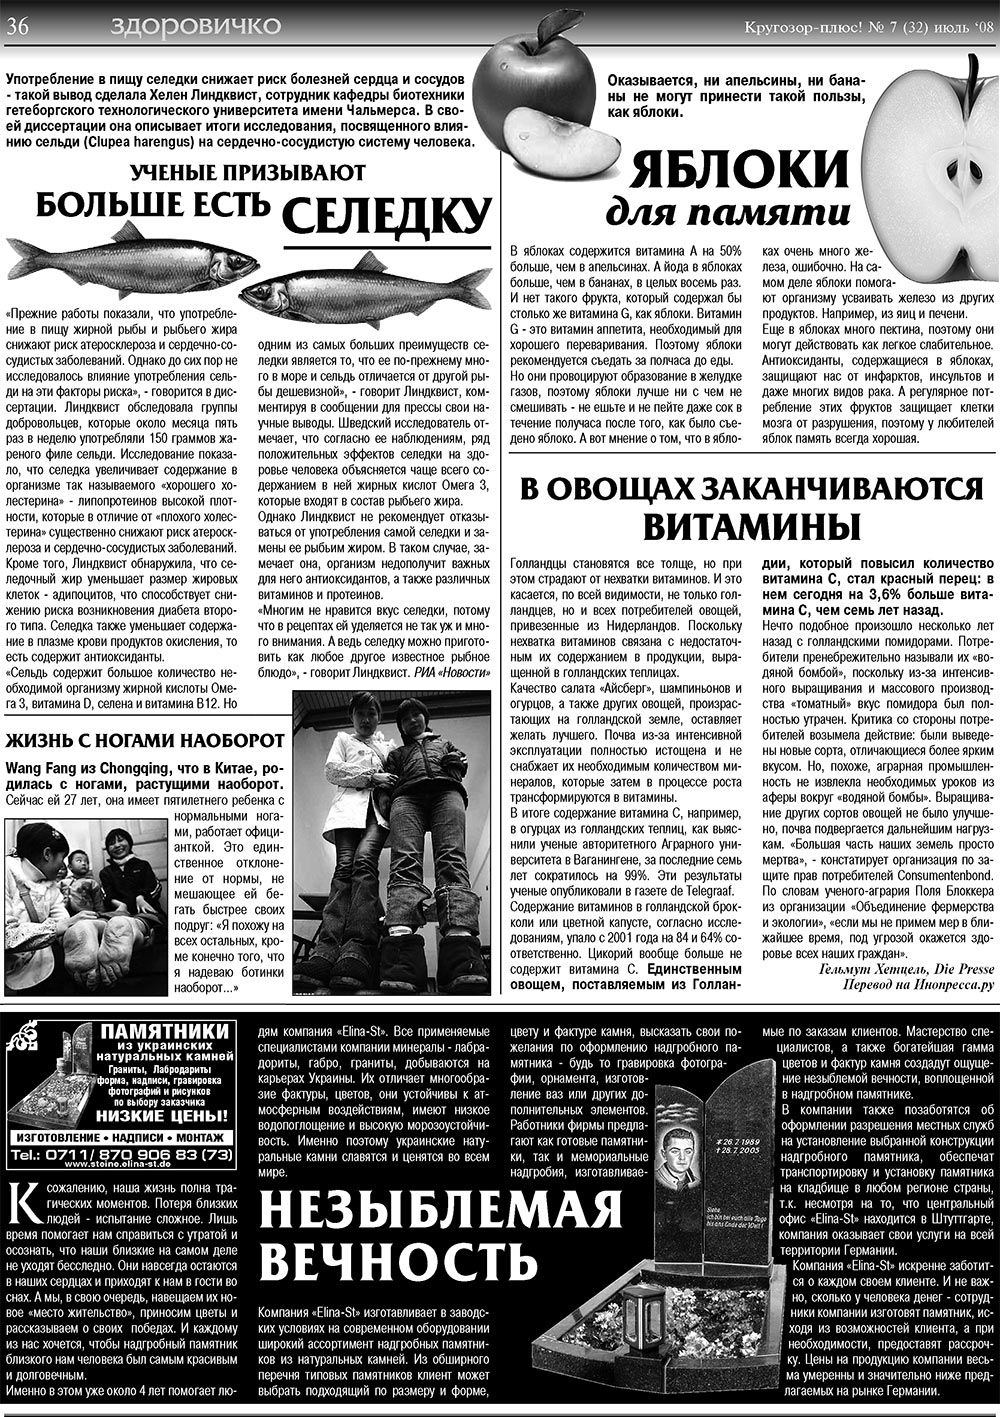 Кругозор плюс! (газета). 2008 год, номер 7, стр. 36